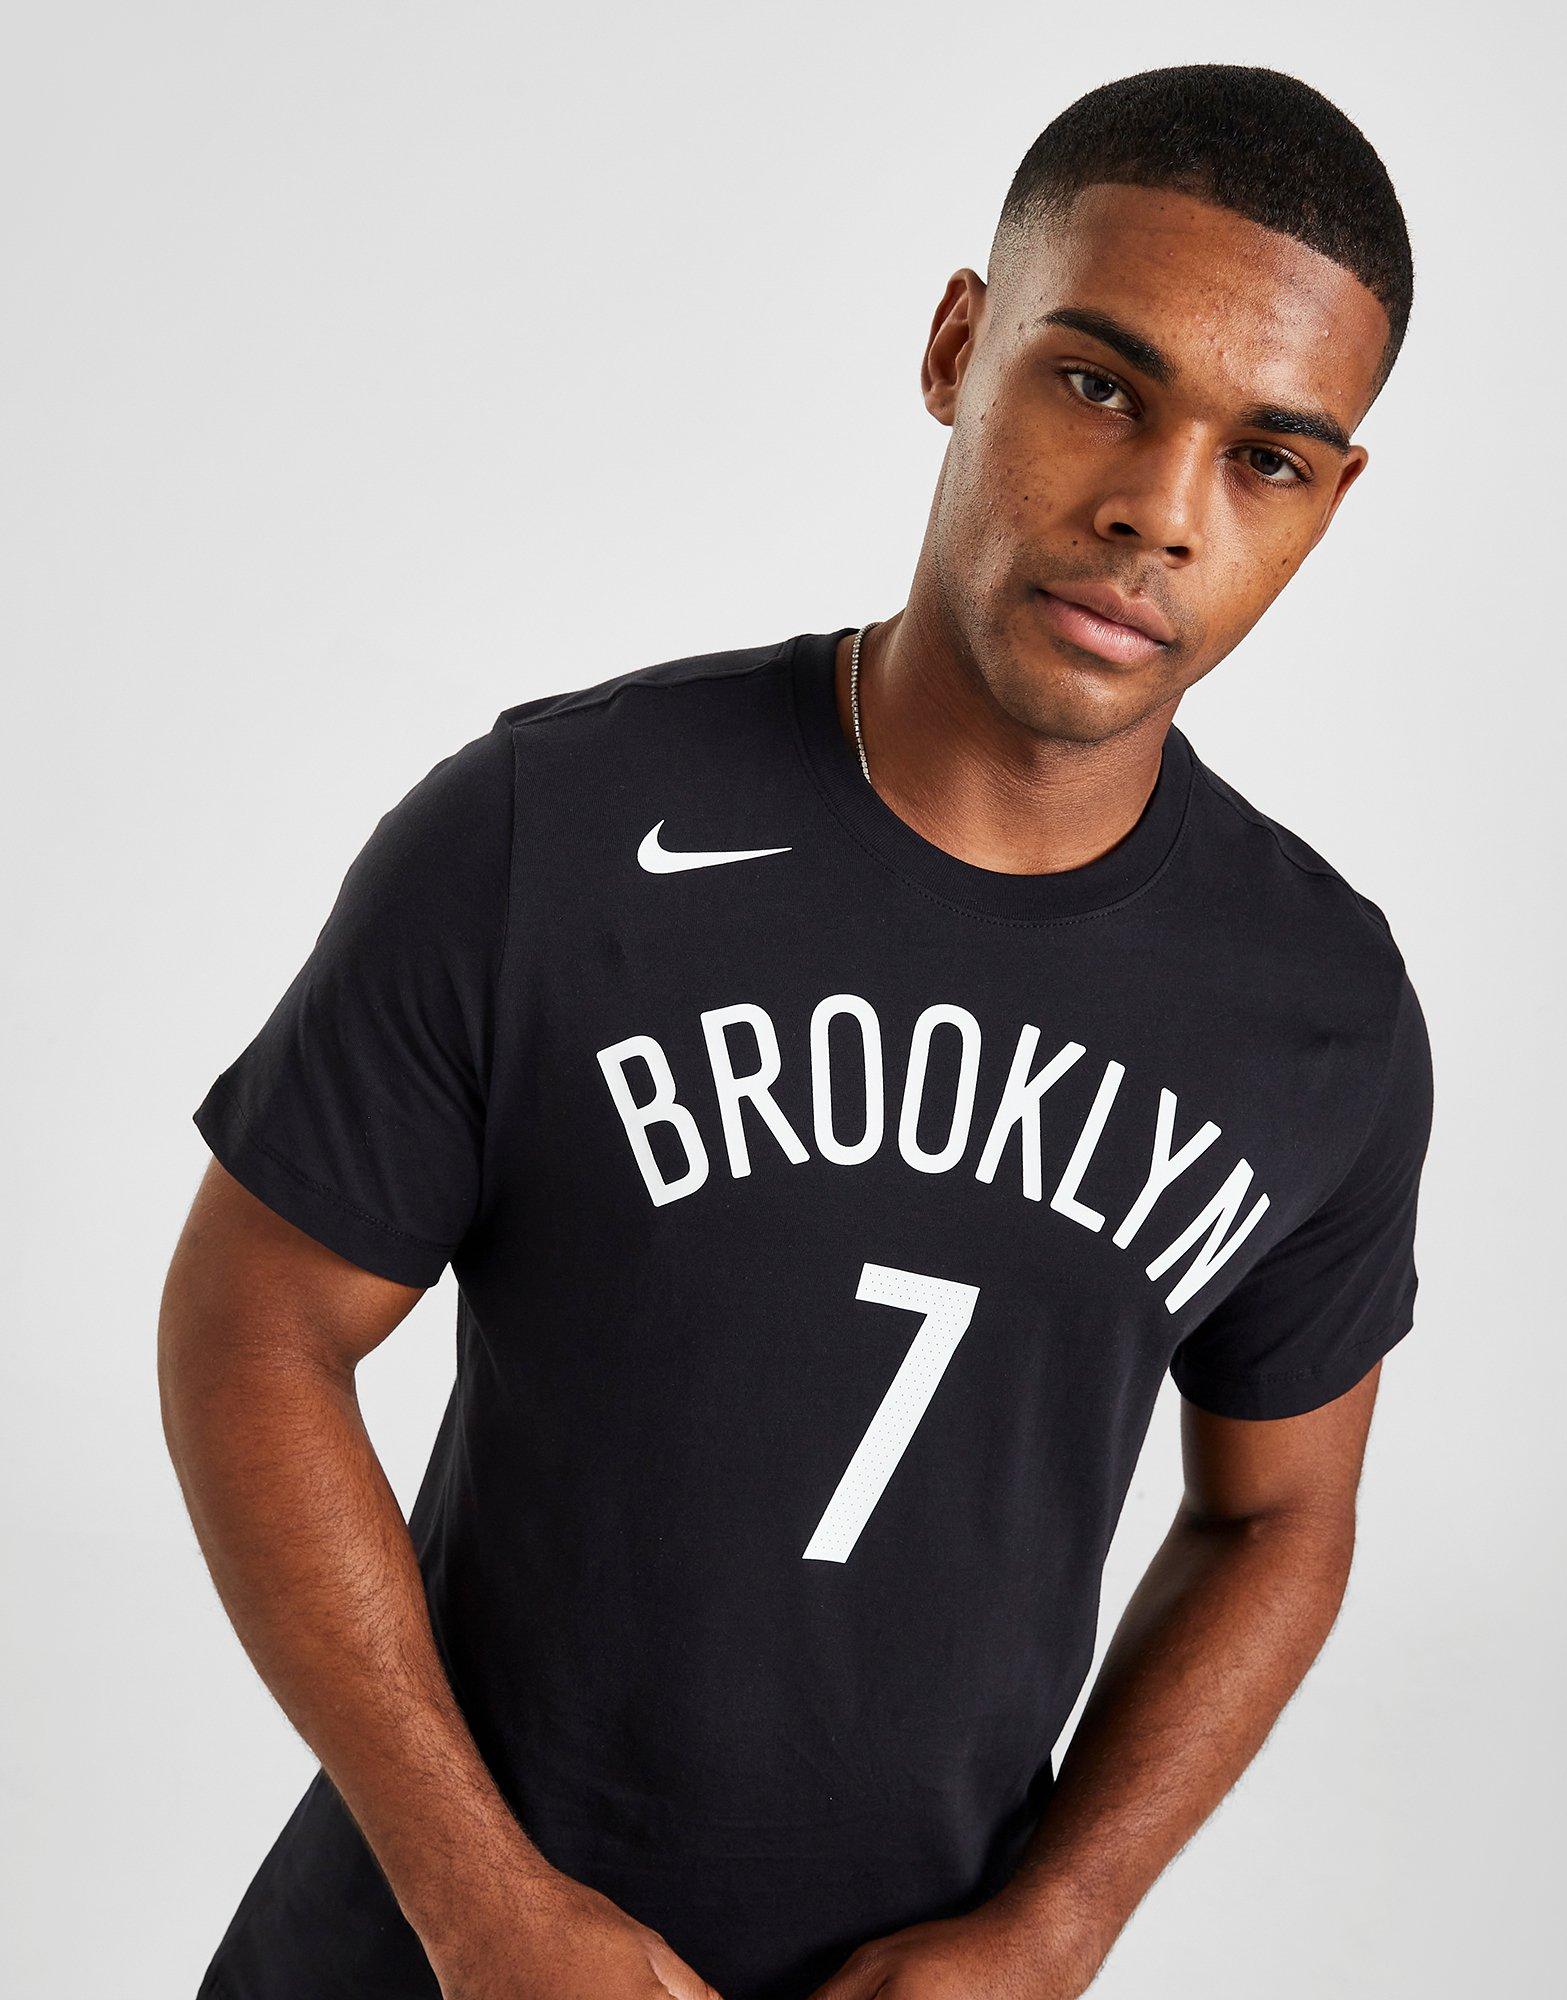 Nike camiseta NBA Brooklyn Nets #7 en Negro JD Sports España